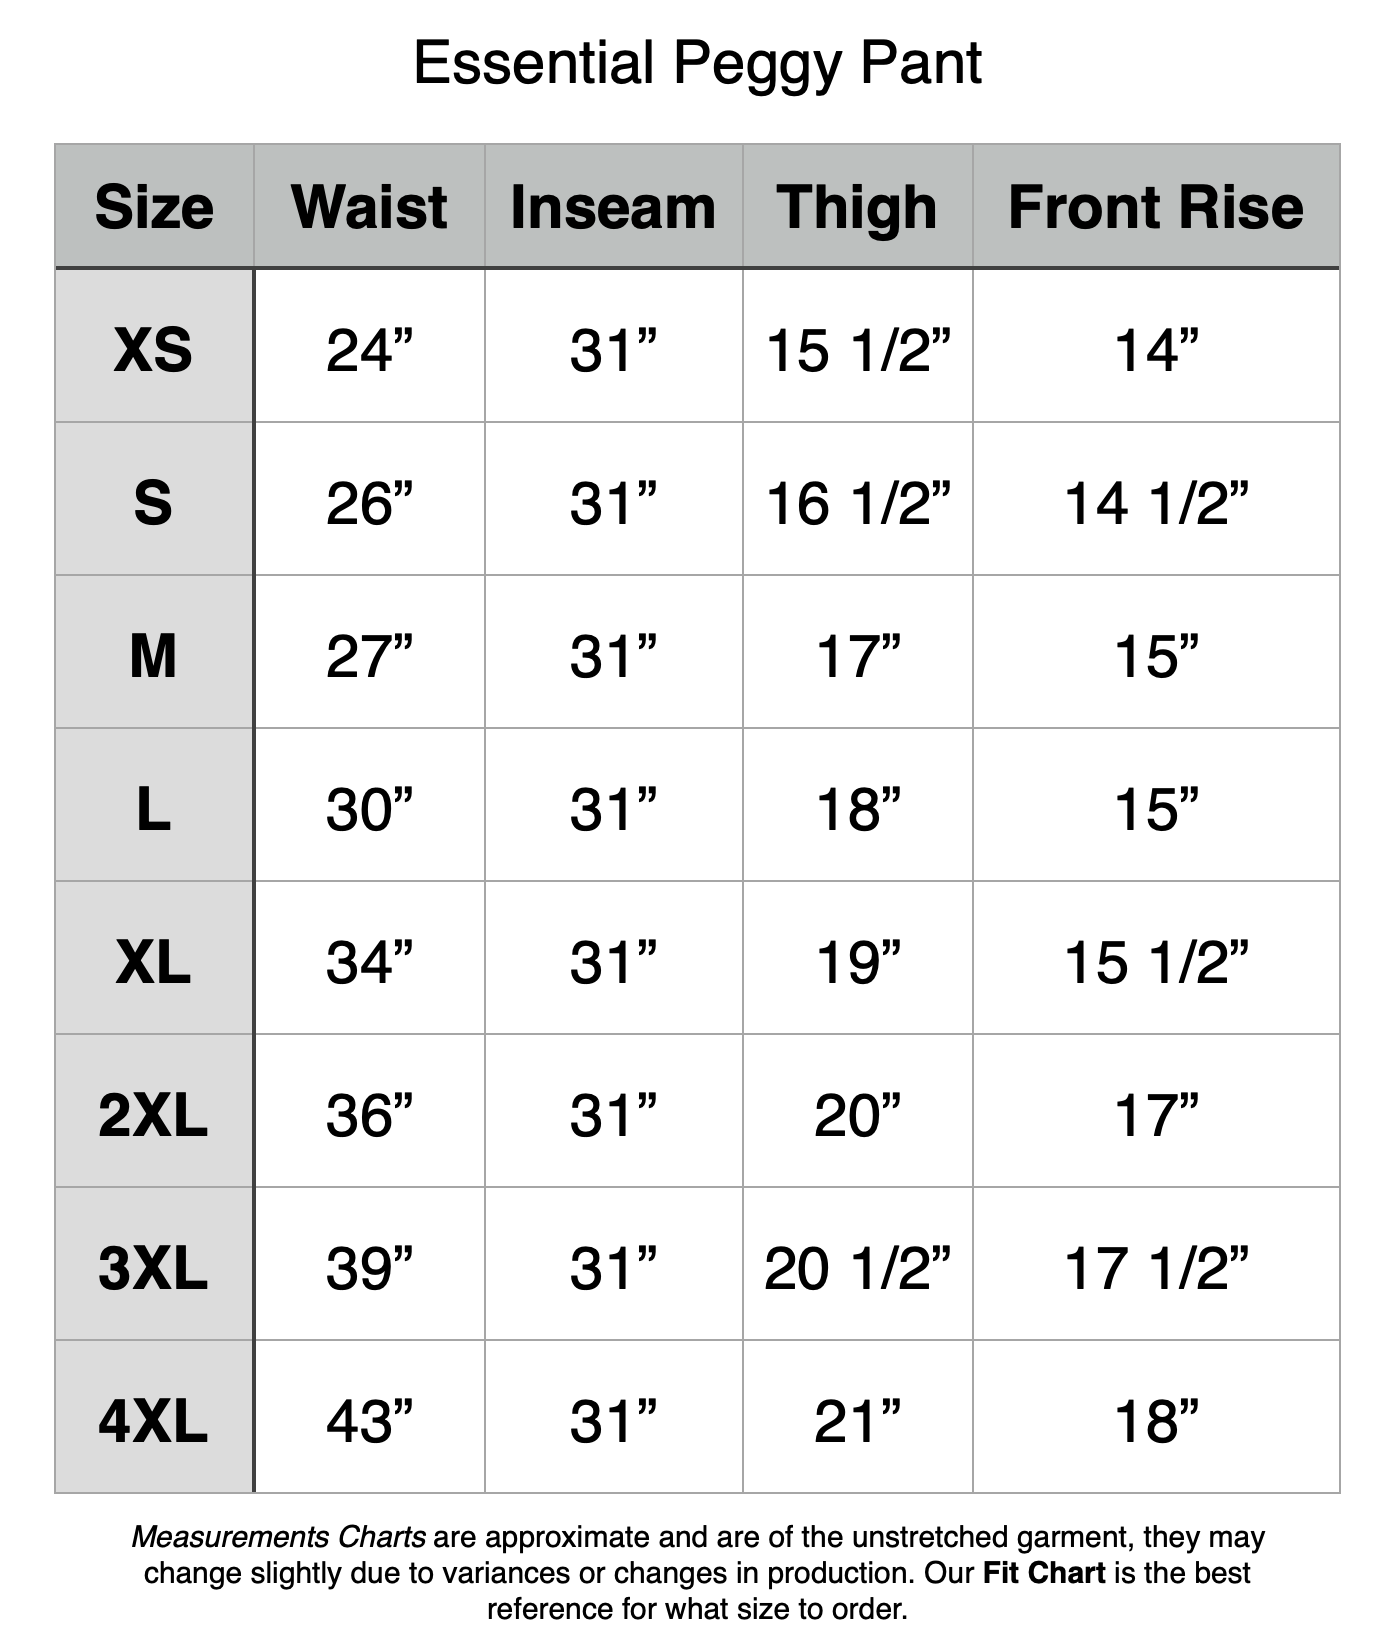 Essential Peggy Pant. XS - 24" Waist, 31" Inseam, 15.5" Thigh, 14" Front Rise. S - 26" Waist, 31" Inseam, 16.5" Thigh, 14.5" Front Rise. M - 27" Waist, 31" Inseam, 17" Thigh, 15" Front Rise. L - 30" Waist, 31" Inseam, 18" Thigh, 15" Front Rise. XL - 34" Waist, 31" Inseam, 19" Thigh, 15.5" Front Rise. 2XL - 36" Waist, 31" Inseam, 20" Thigh, 17" Front Rise. 3XL - 39" Waist, 31" Inseam, 20.5" Thigh, 17.5" Front Rise. 4XL - 43" Waist, 31" Inseam, 21" Thigh, 18" Front Rise.